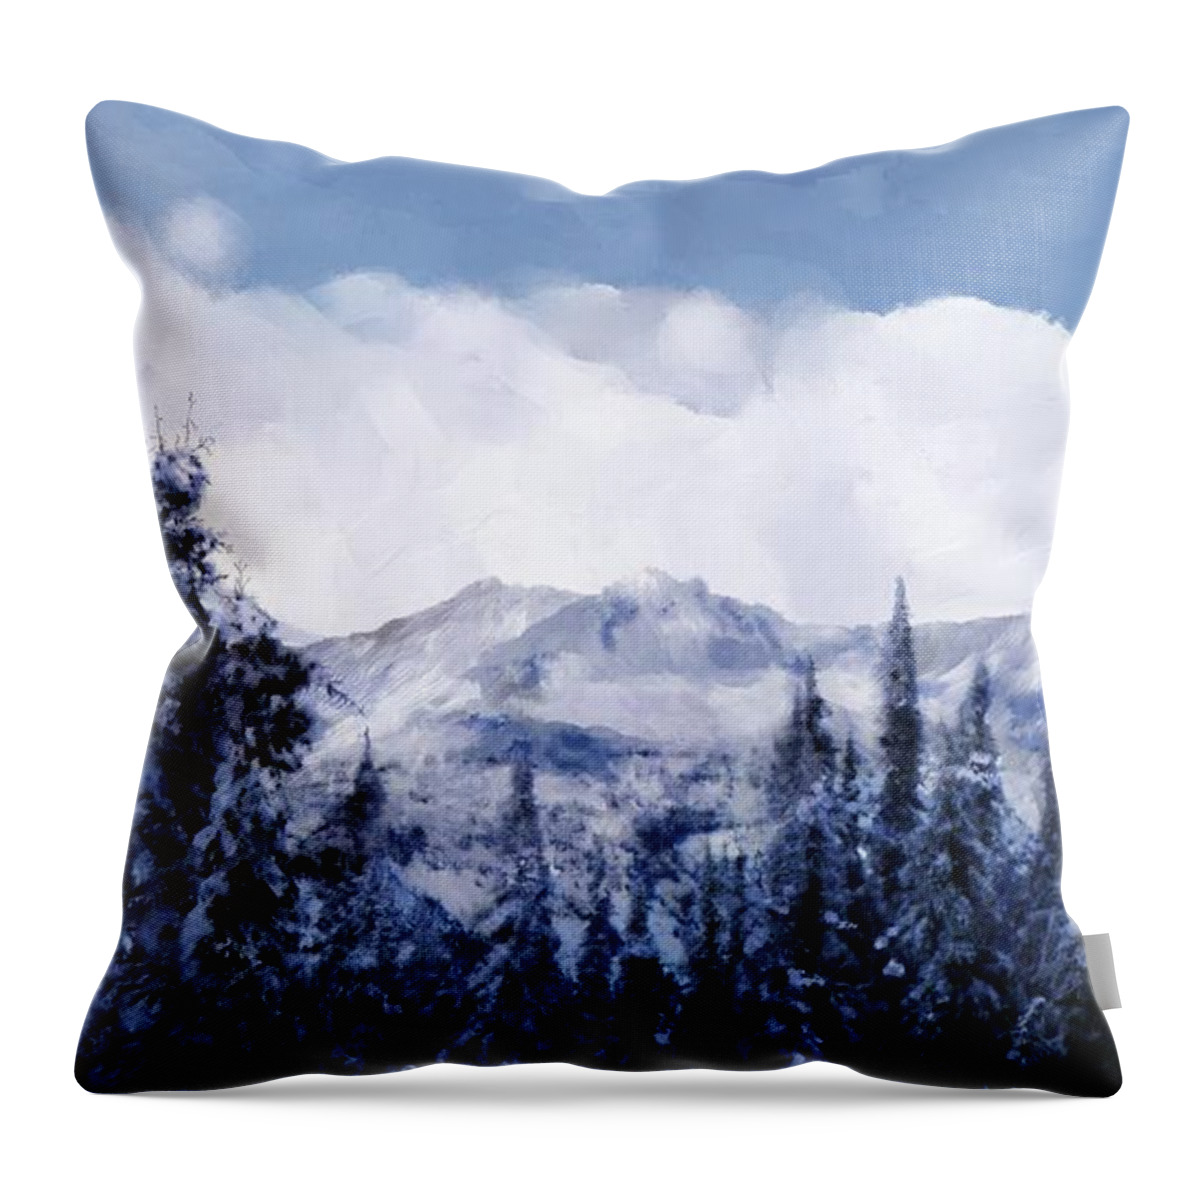 Beautiful Throw Pillow featuring the digital art Winter at Revelstoke by Debra Baldwin